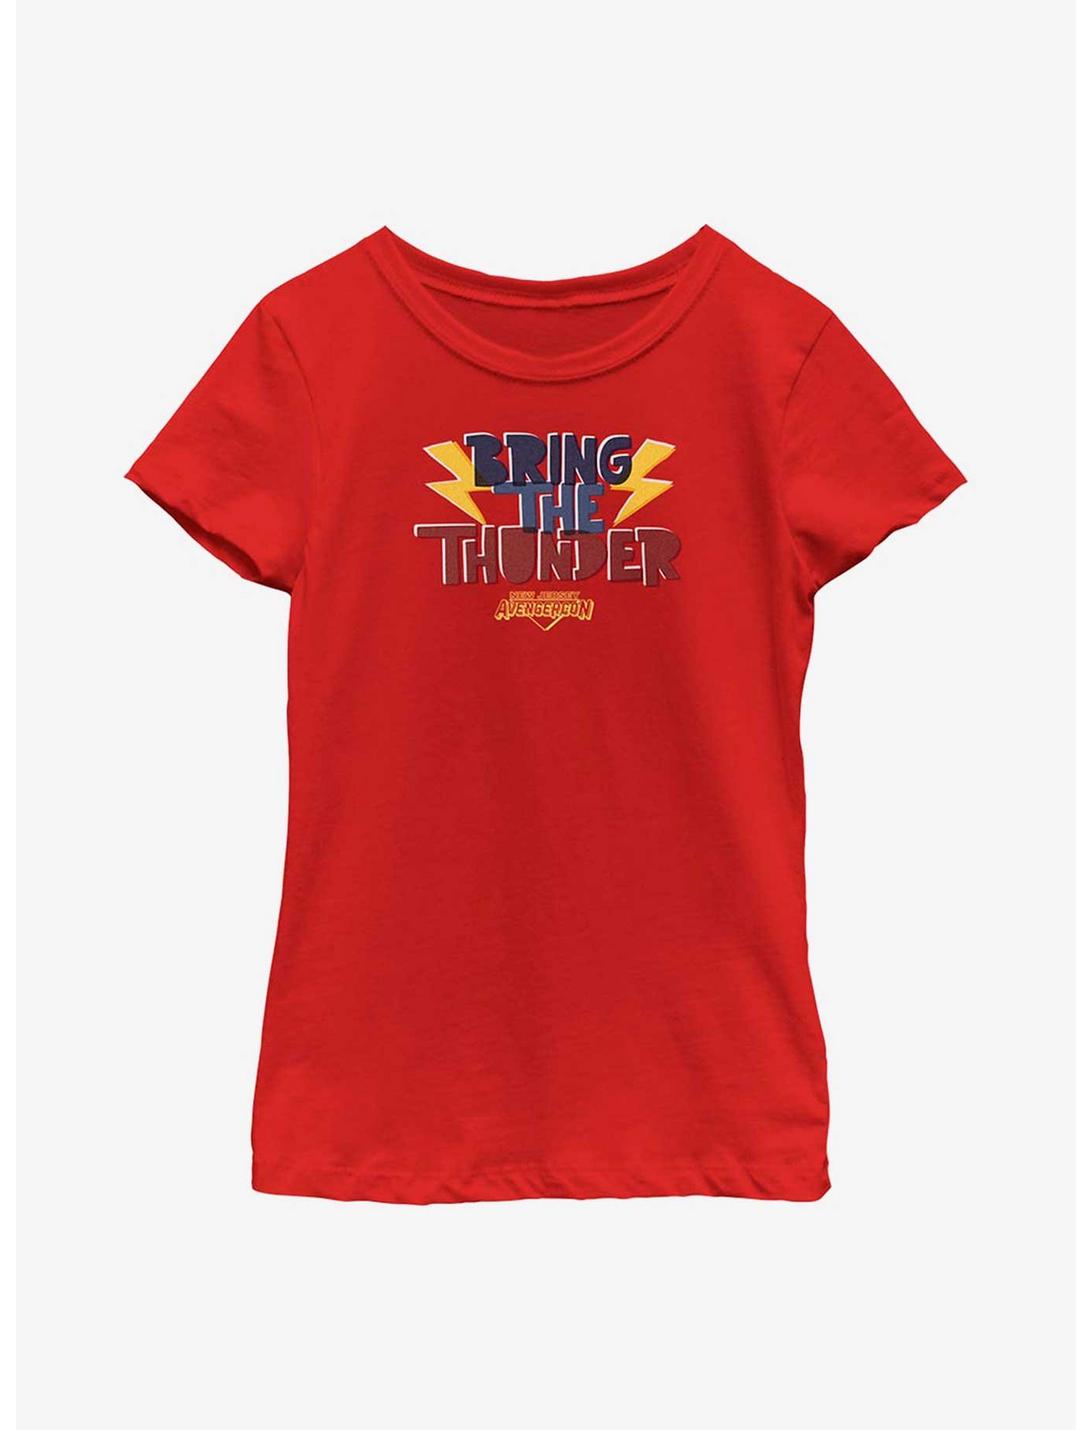 Marvel Ms. Marvel Bring Thunder Avengercon Youth Girls T-Shirt, RED, hi-res